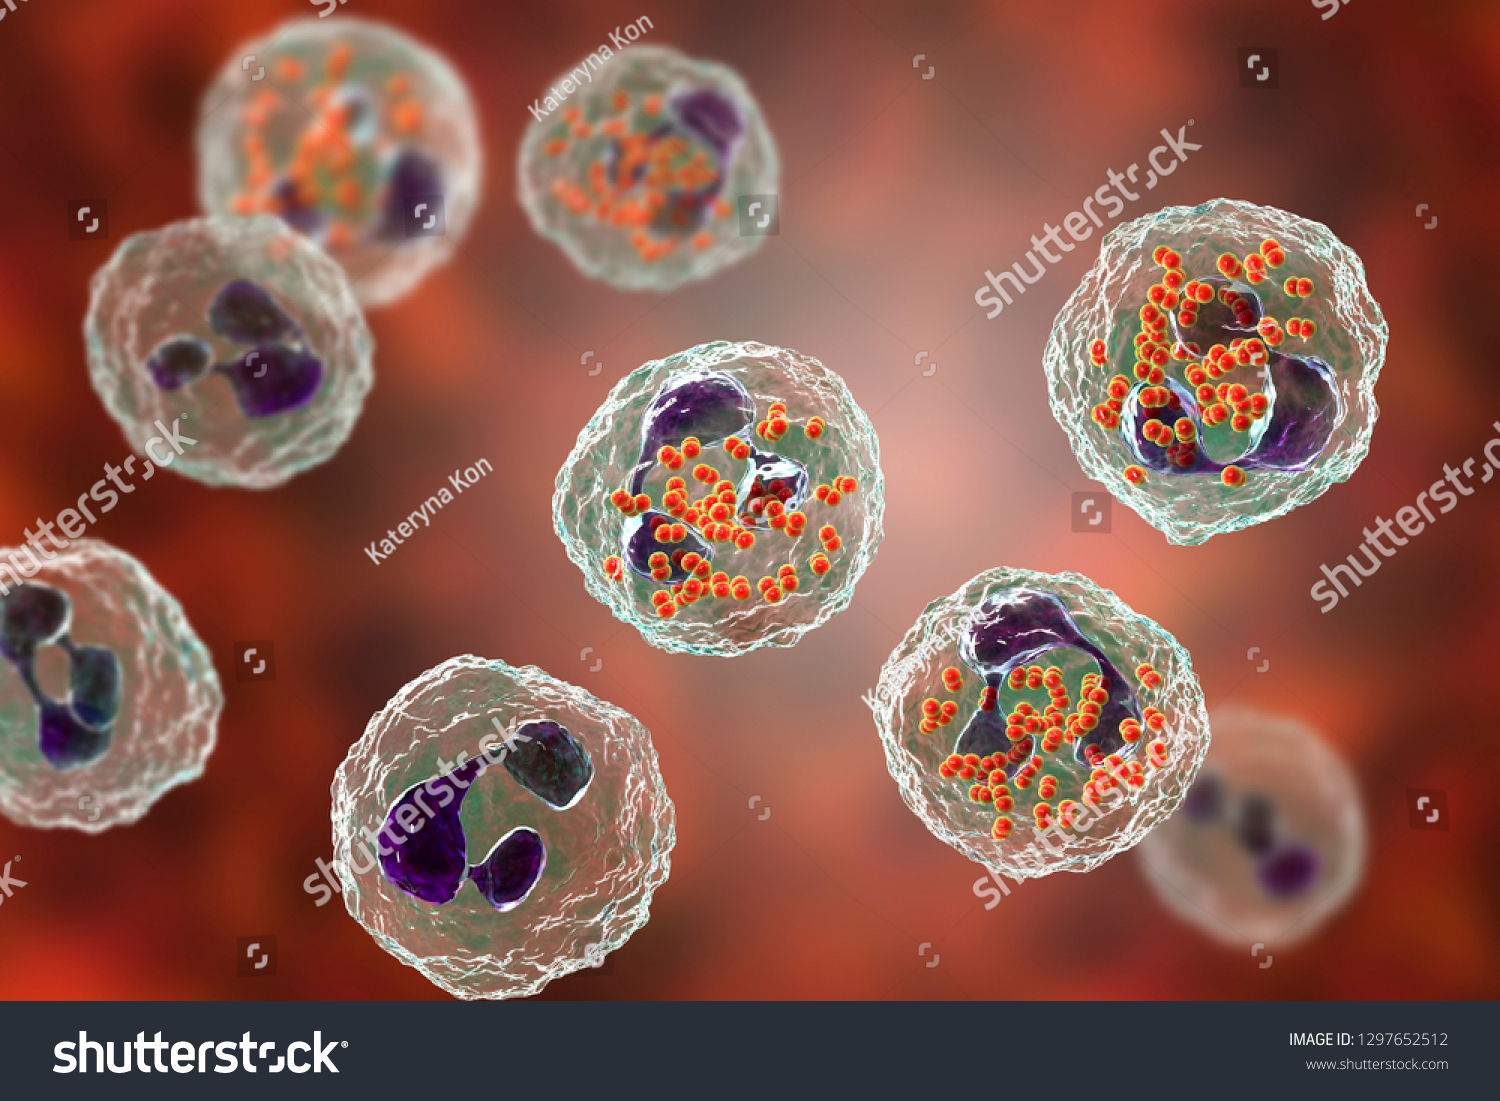 Bacteria Neisseria Gonorrhoeae Inside Neutrophils Gonoccoccus Stock Illustration 1297652512 5283